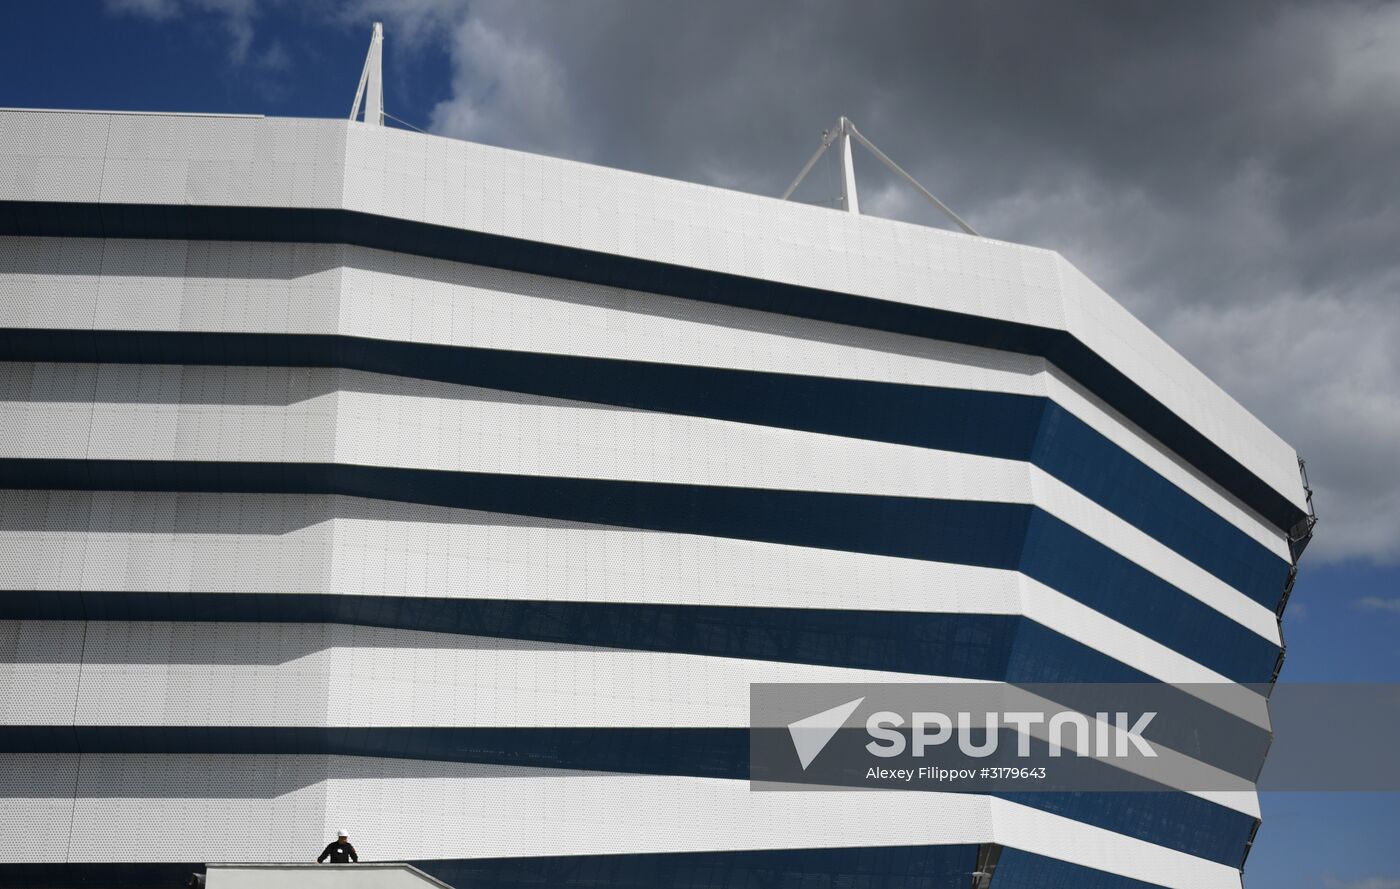 Kaliningrad Stadium construction site